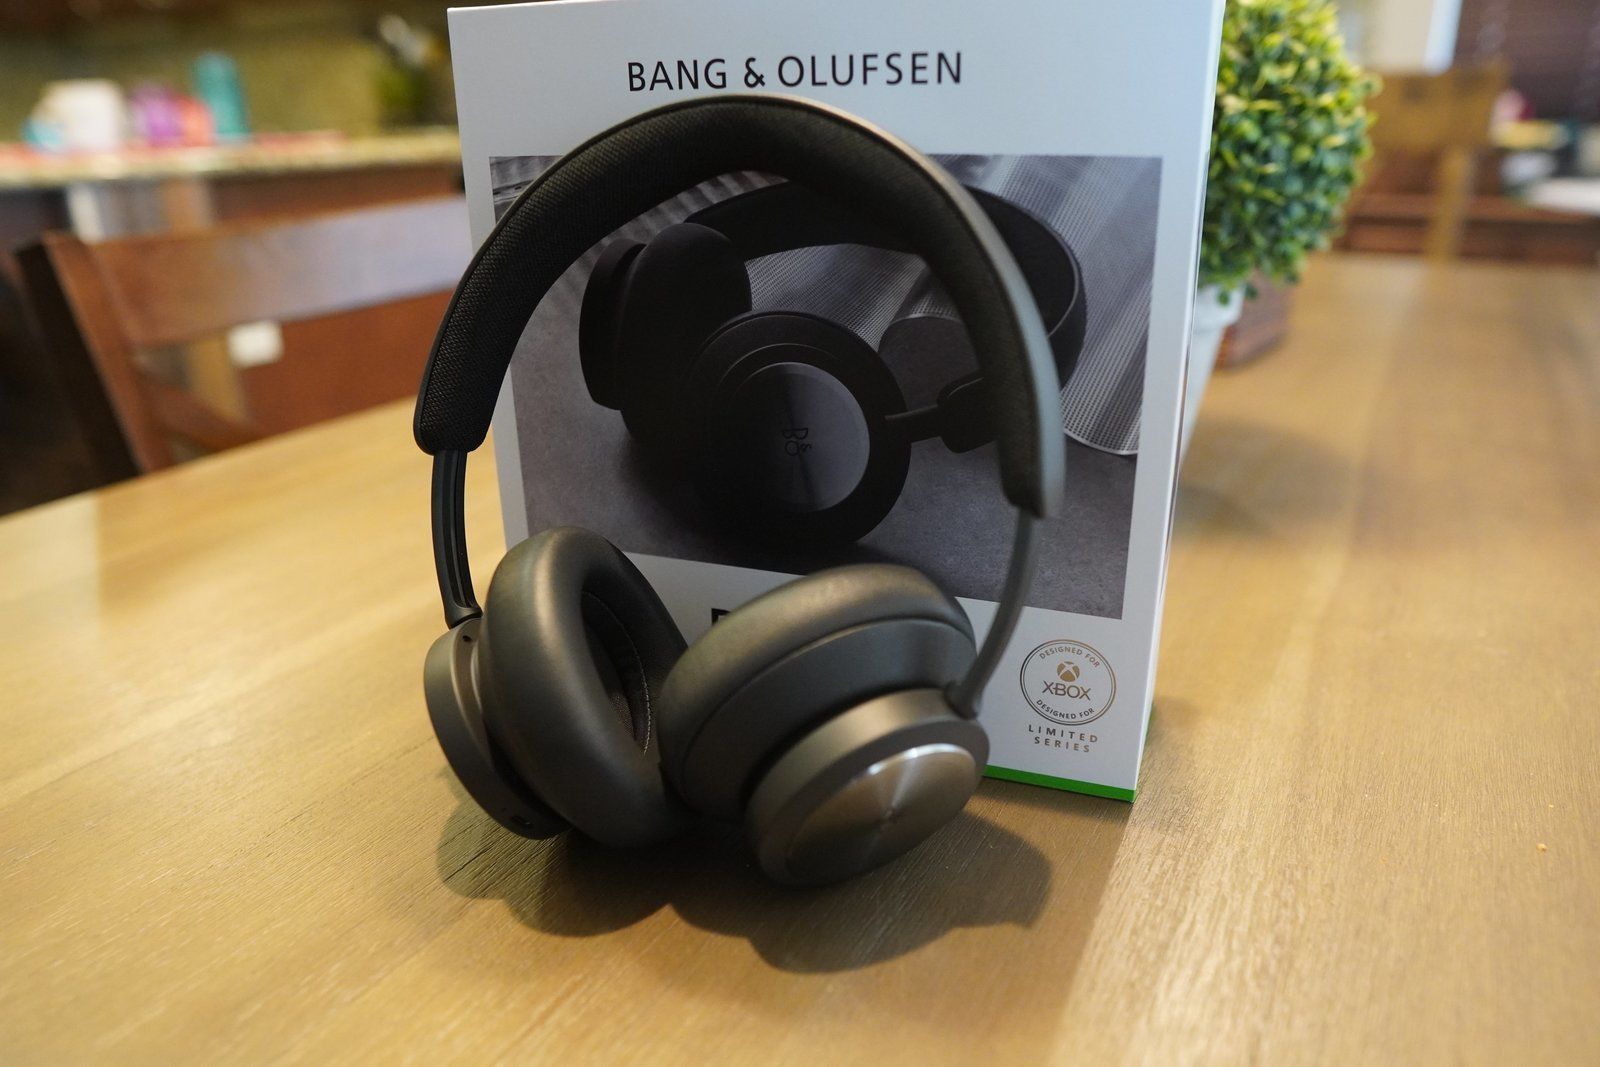 Gamertag Radio / Bang & Olufsen Beoplay Portal Wireless Headphones for